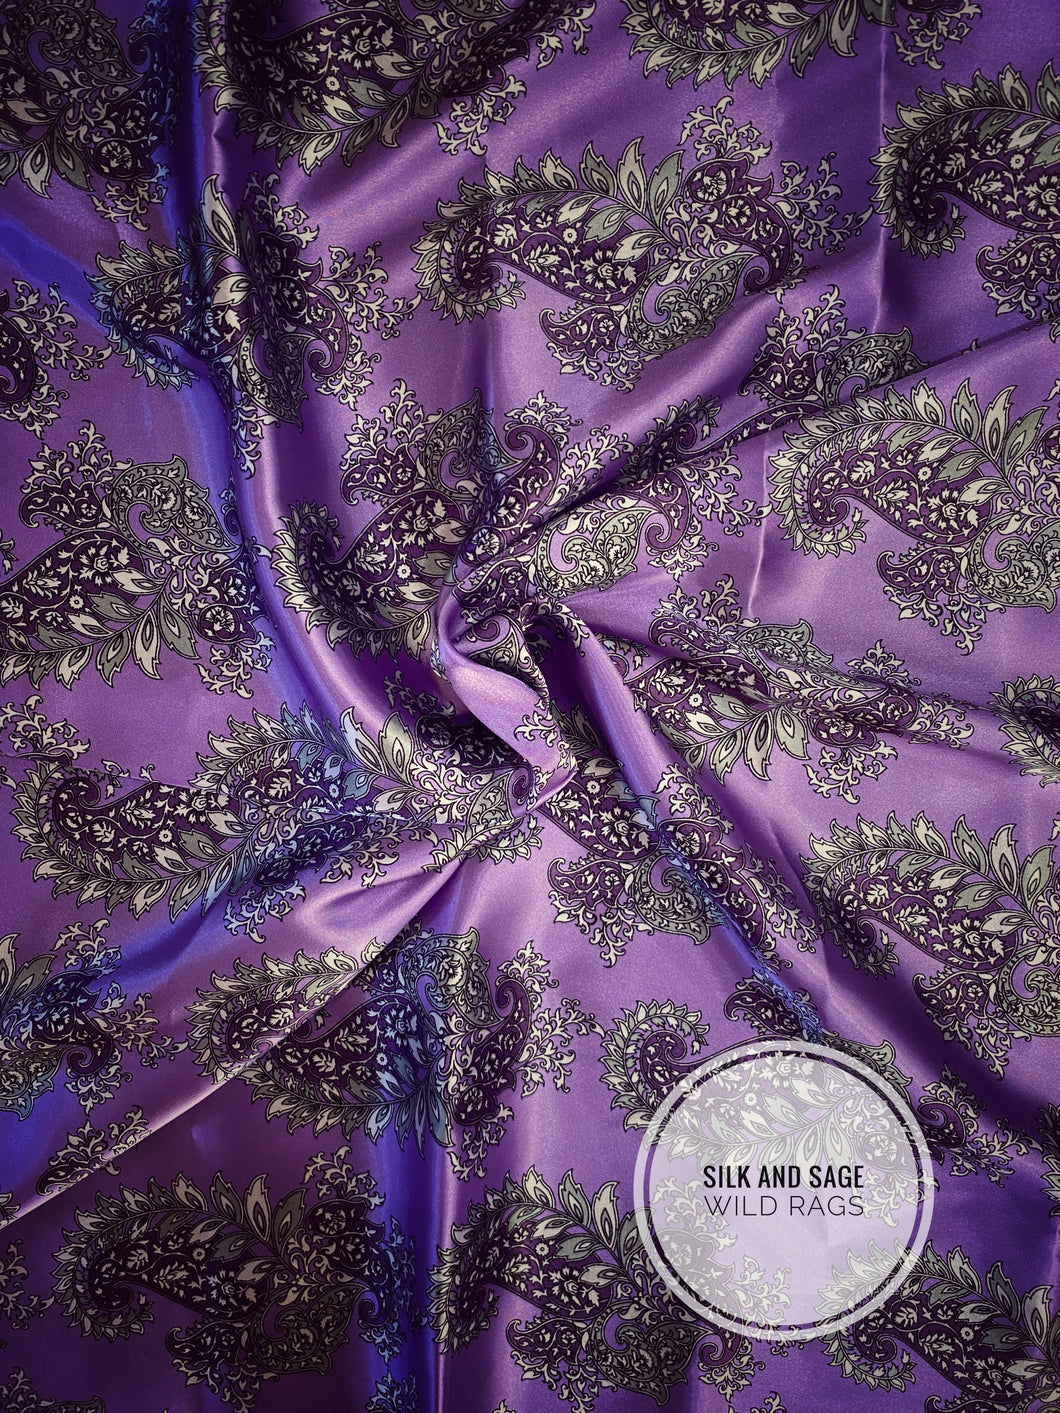 Beautiful purple tone paisley print on a silky charmeuse fabric.